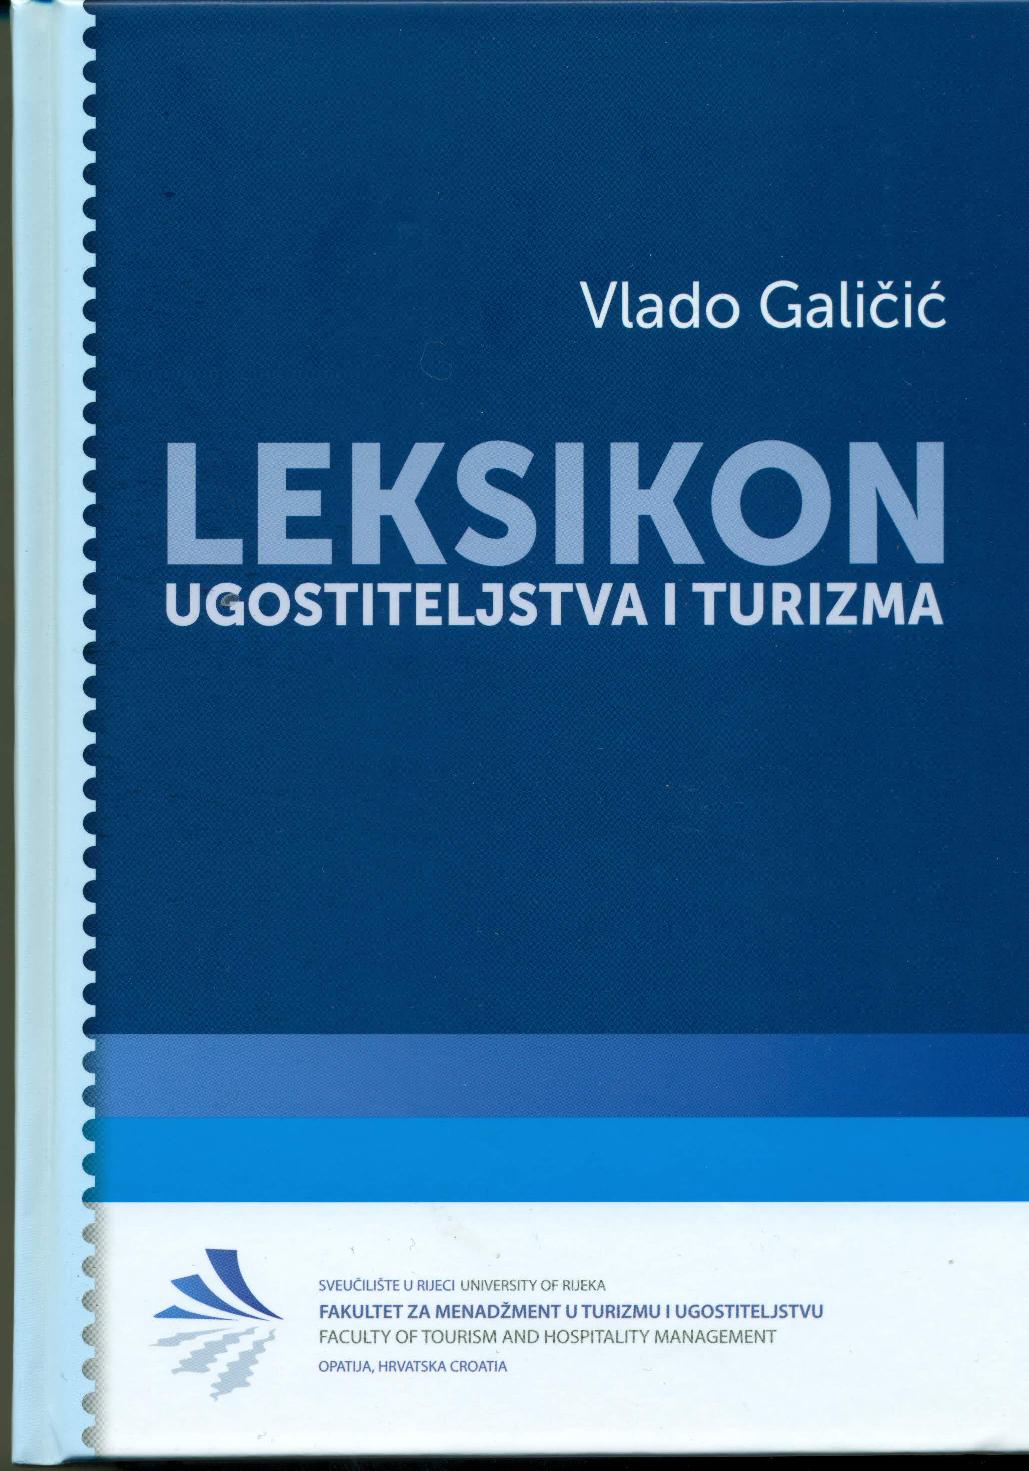 Vlado Galicic Leksikon ugostiteljstva i turizma page 001